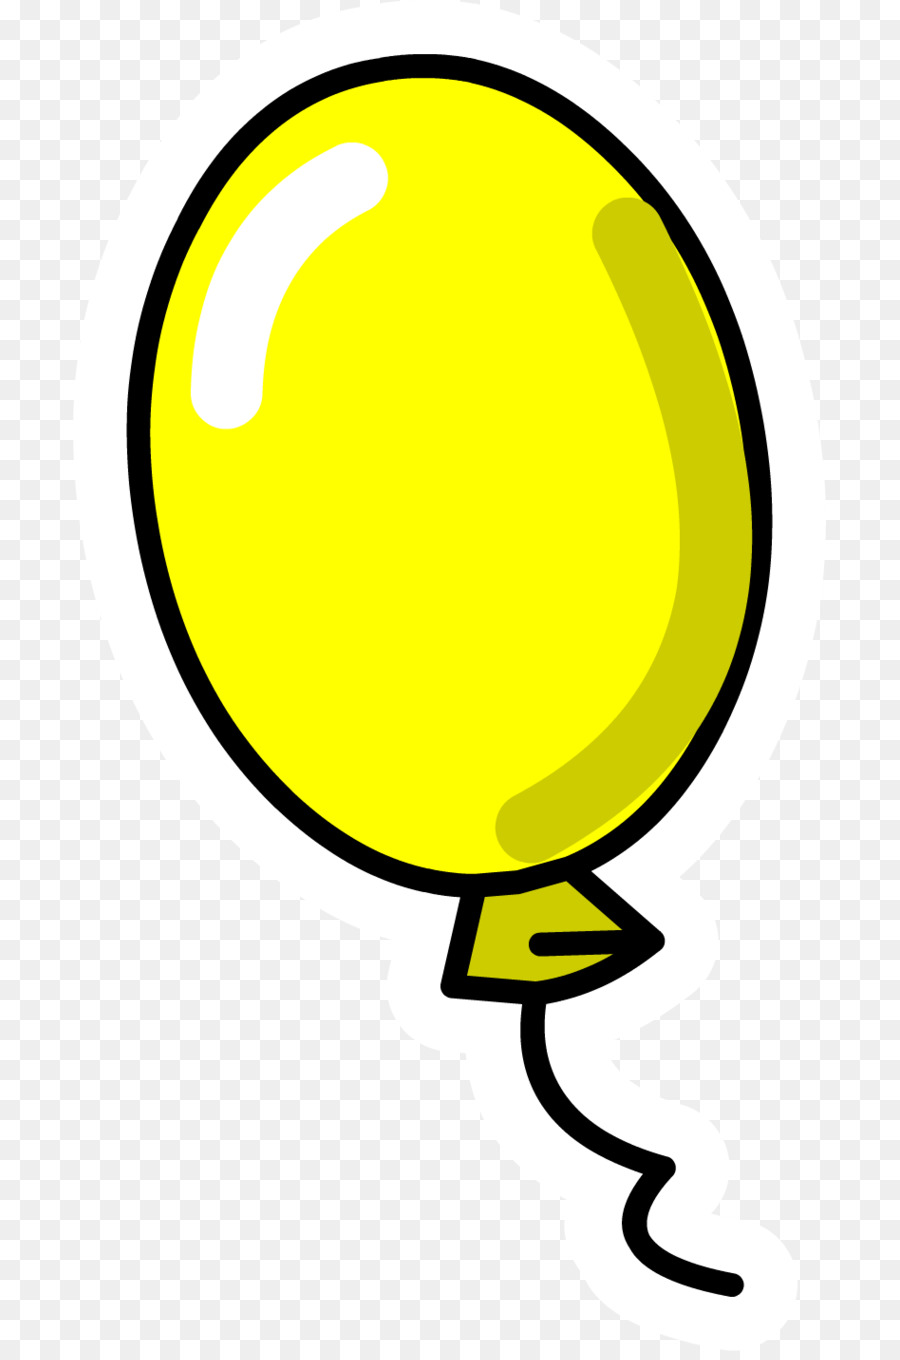 Club Penguin Giallo Clip art - il palloncino giallo clipart